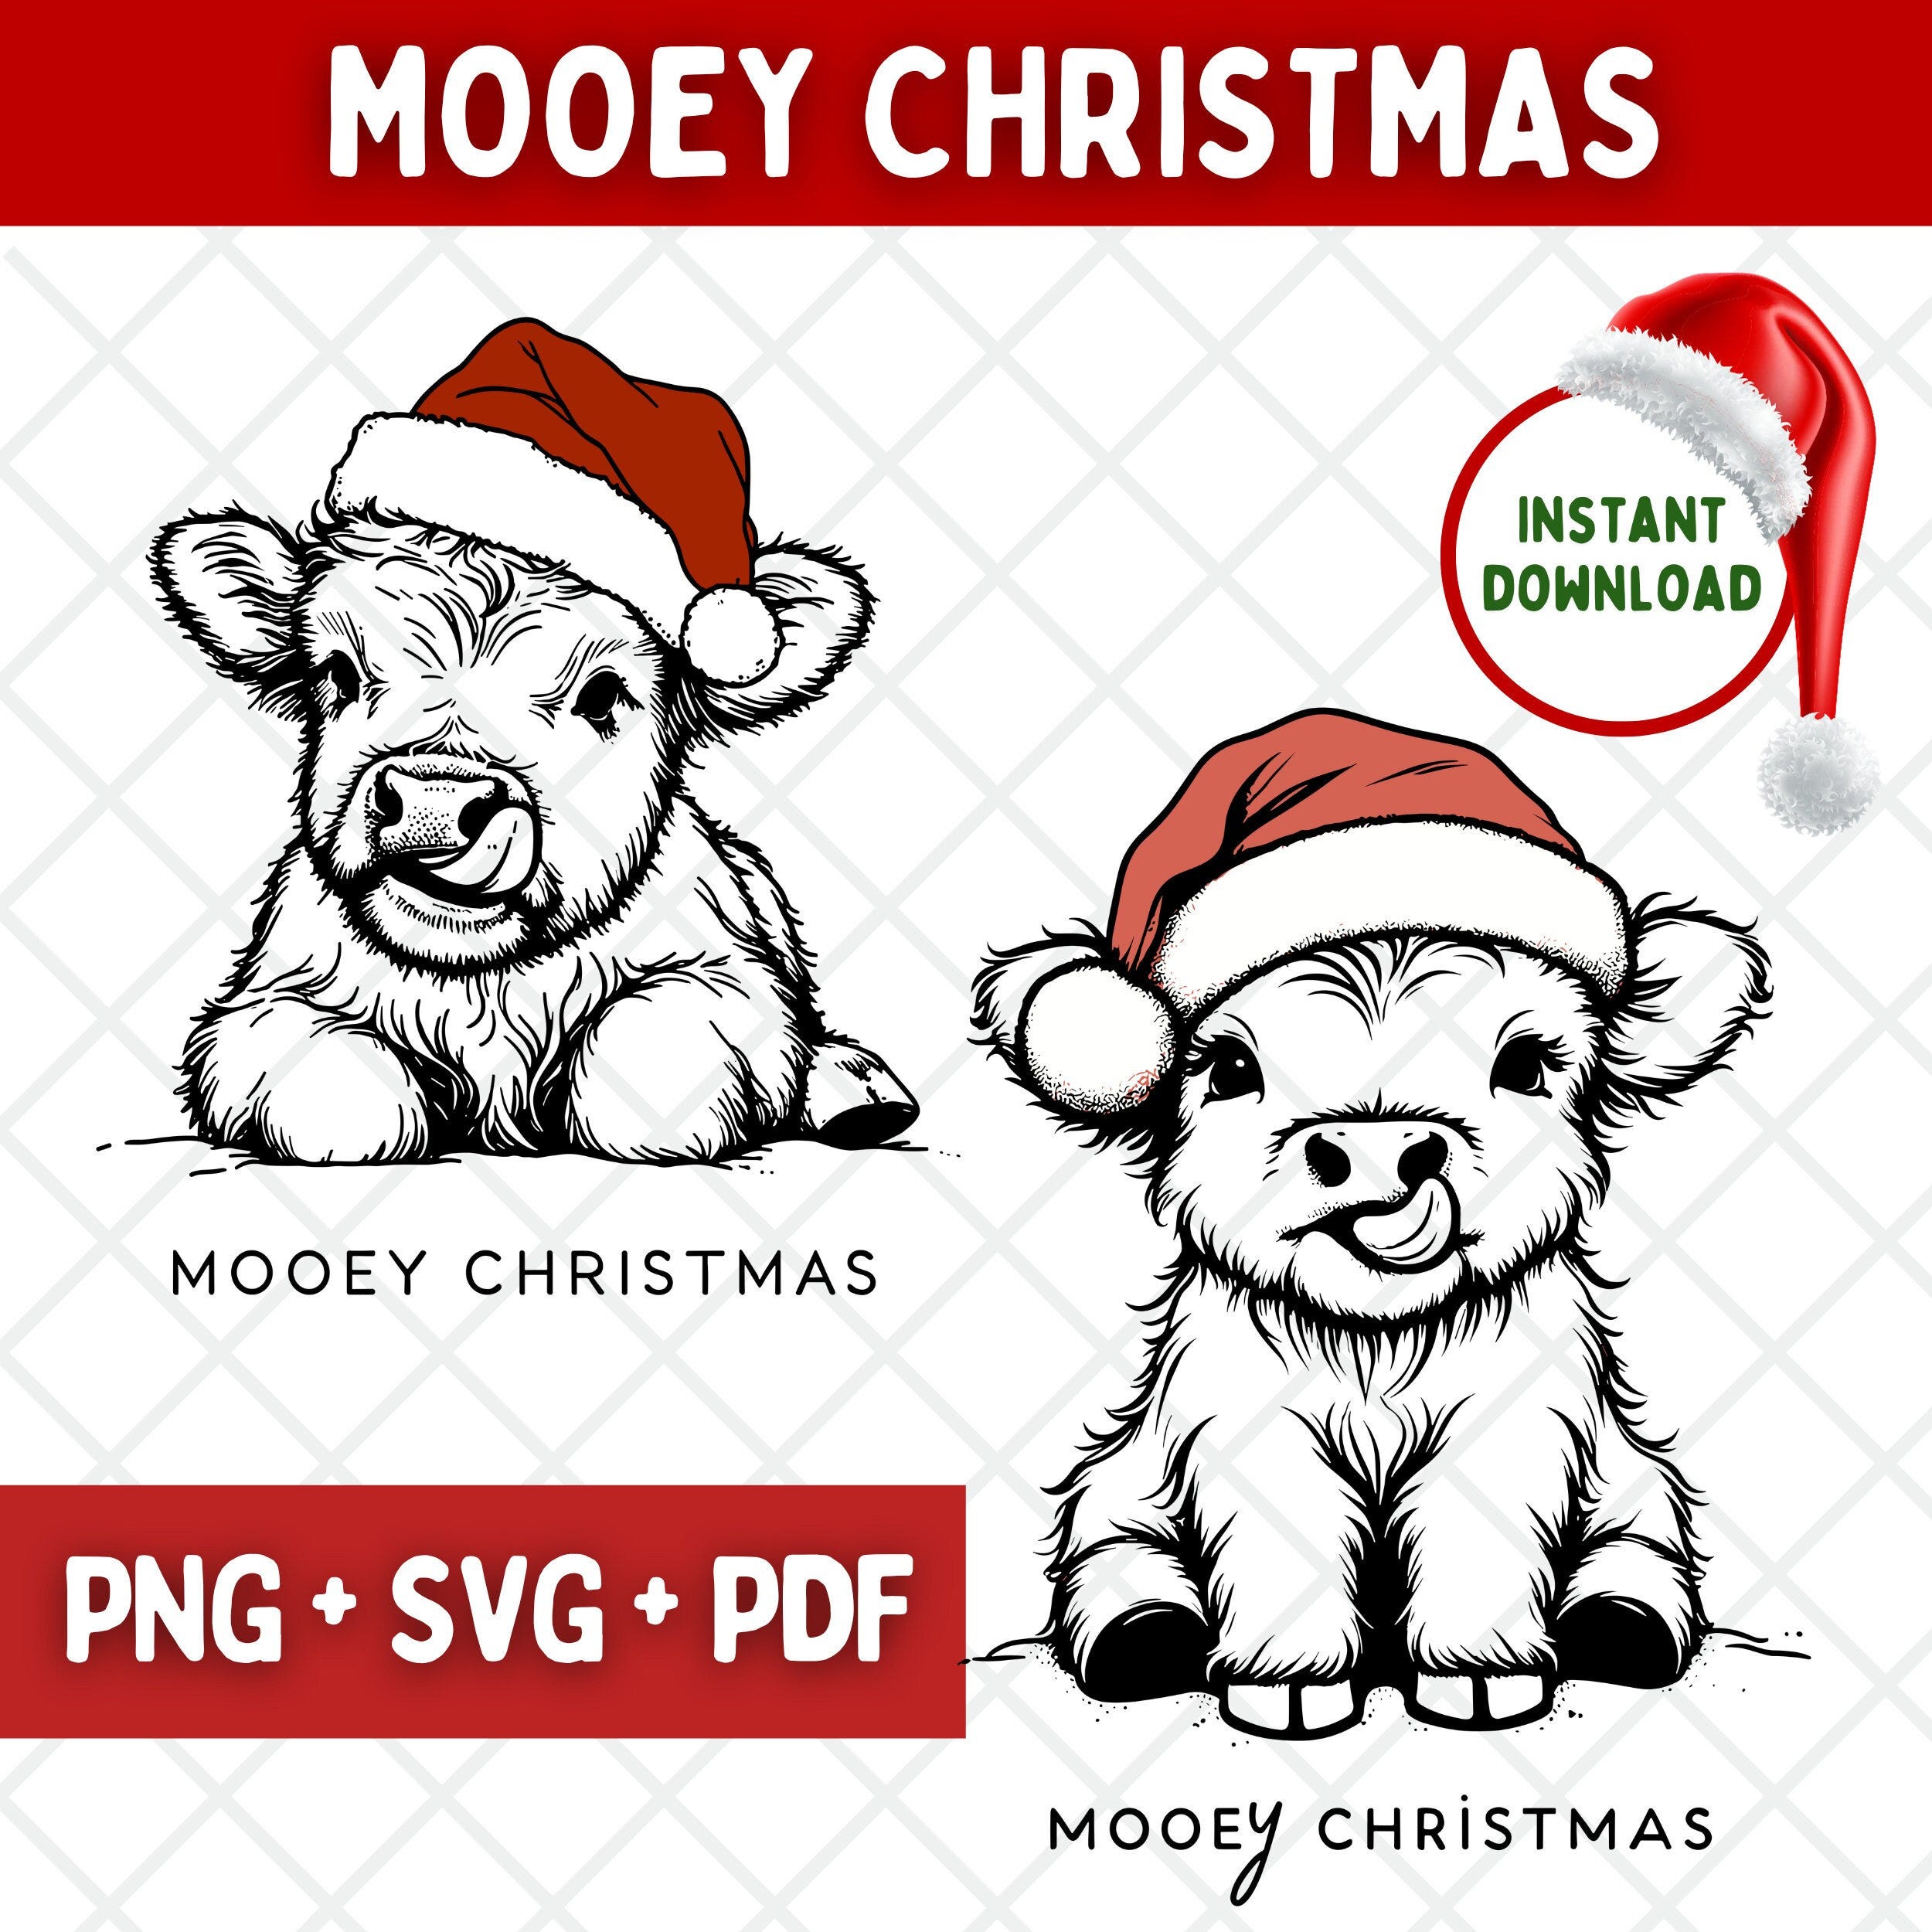 2 Mooey Christmas Cow SVG, PNG, PDF - 2 Festive Cow Designs, Santa Hat, Farmhouse Decor, Merry Xmas Quotes, Christmas Highland Cow Svg